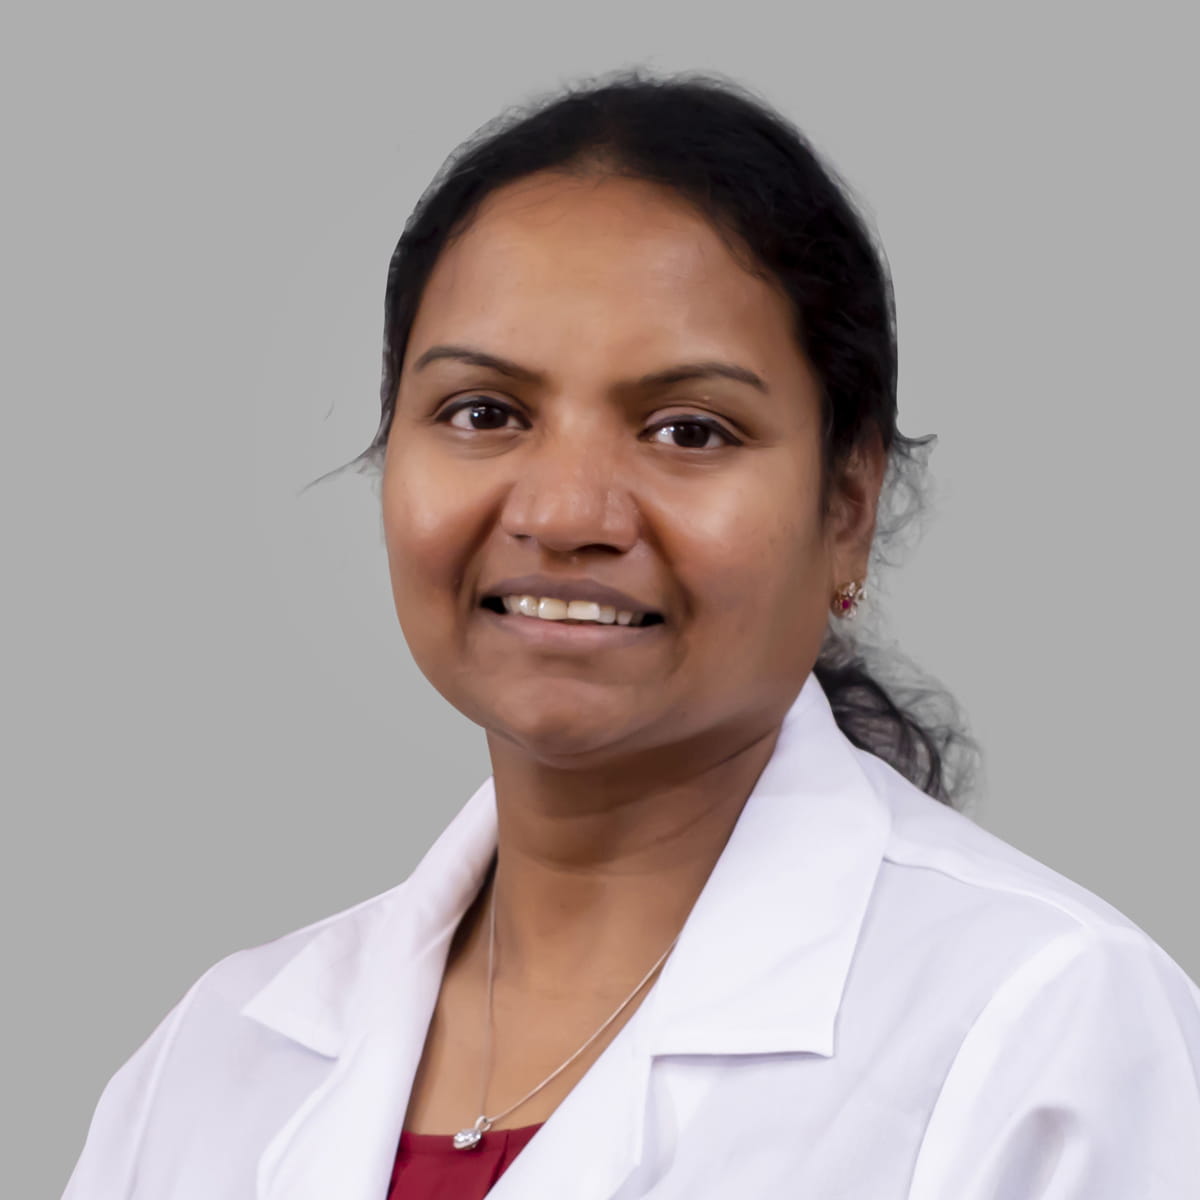 Bindu Repala, MD - Hospital Medicine